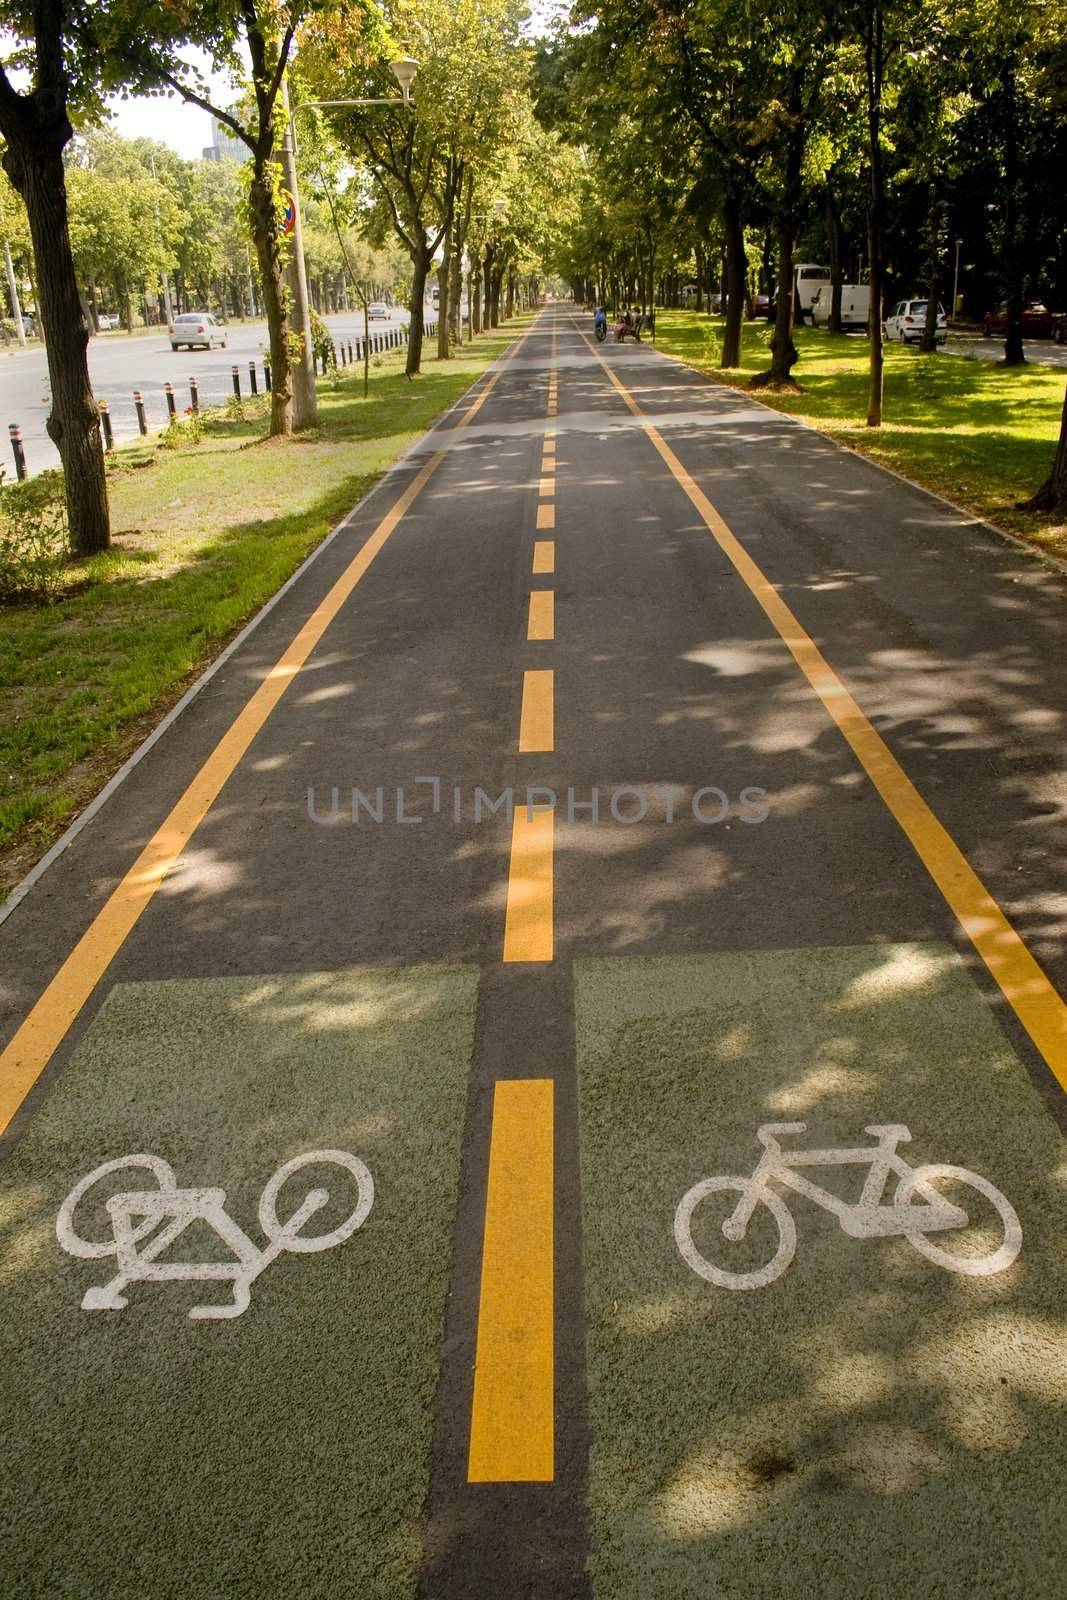 City bike lane along shady wooden street